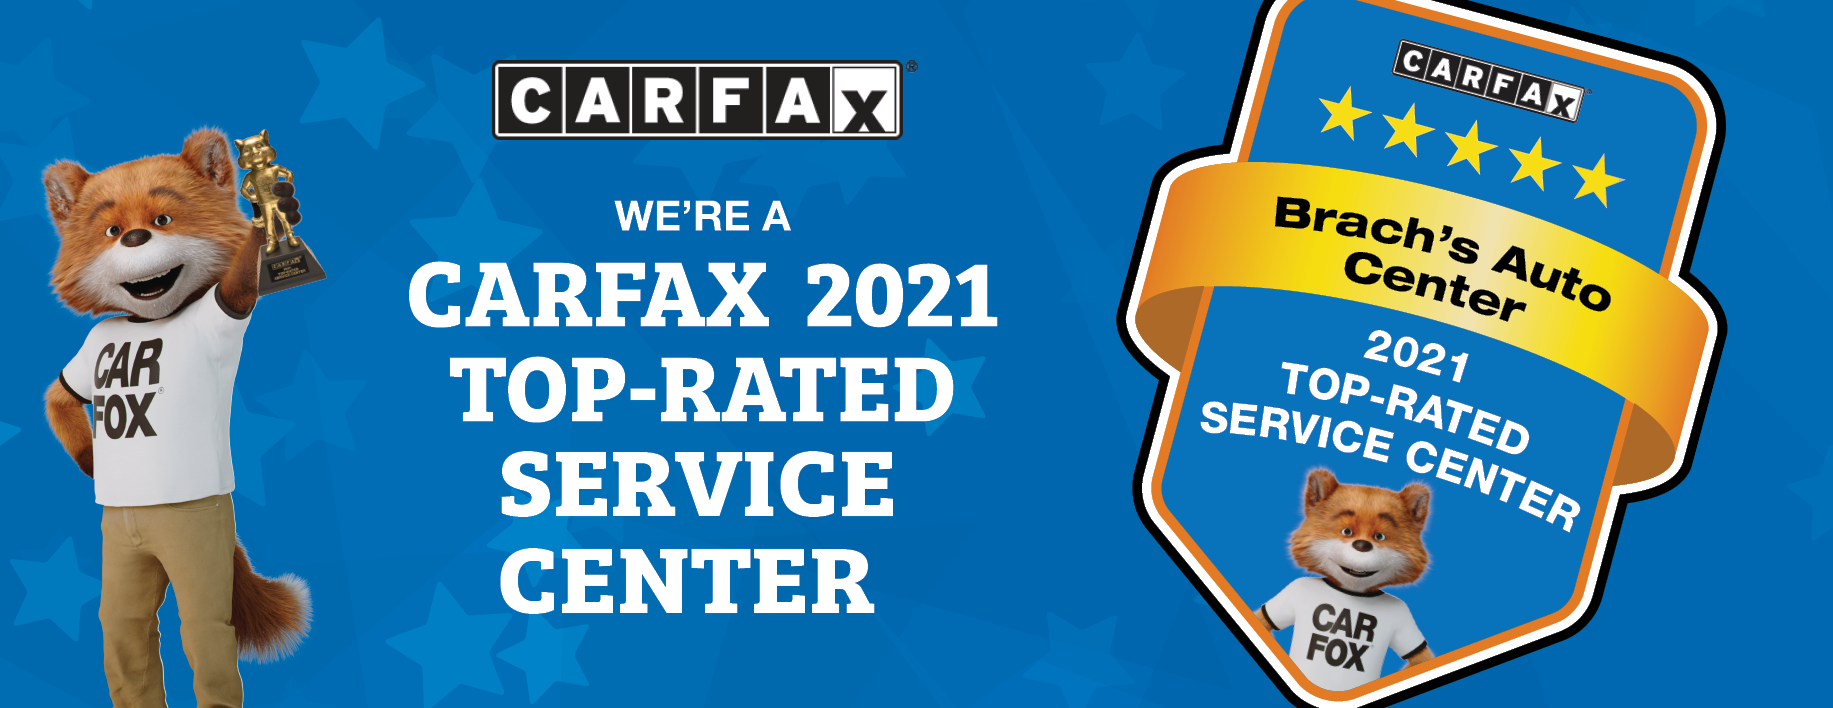 Congratulations Brach's Auto Center, you're a CARFAX 2021 Top-Rated Service Center!